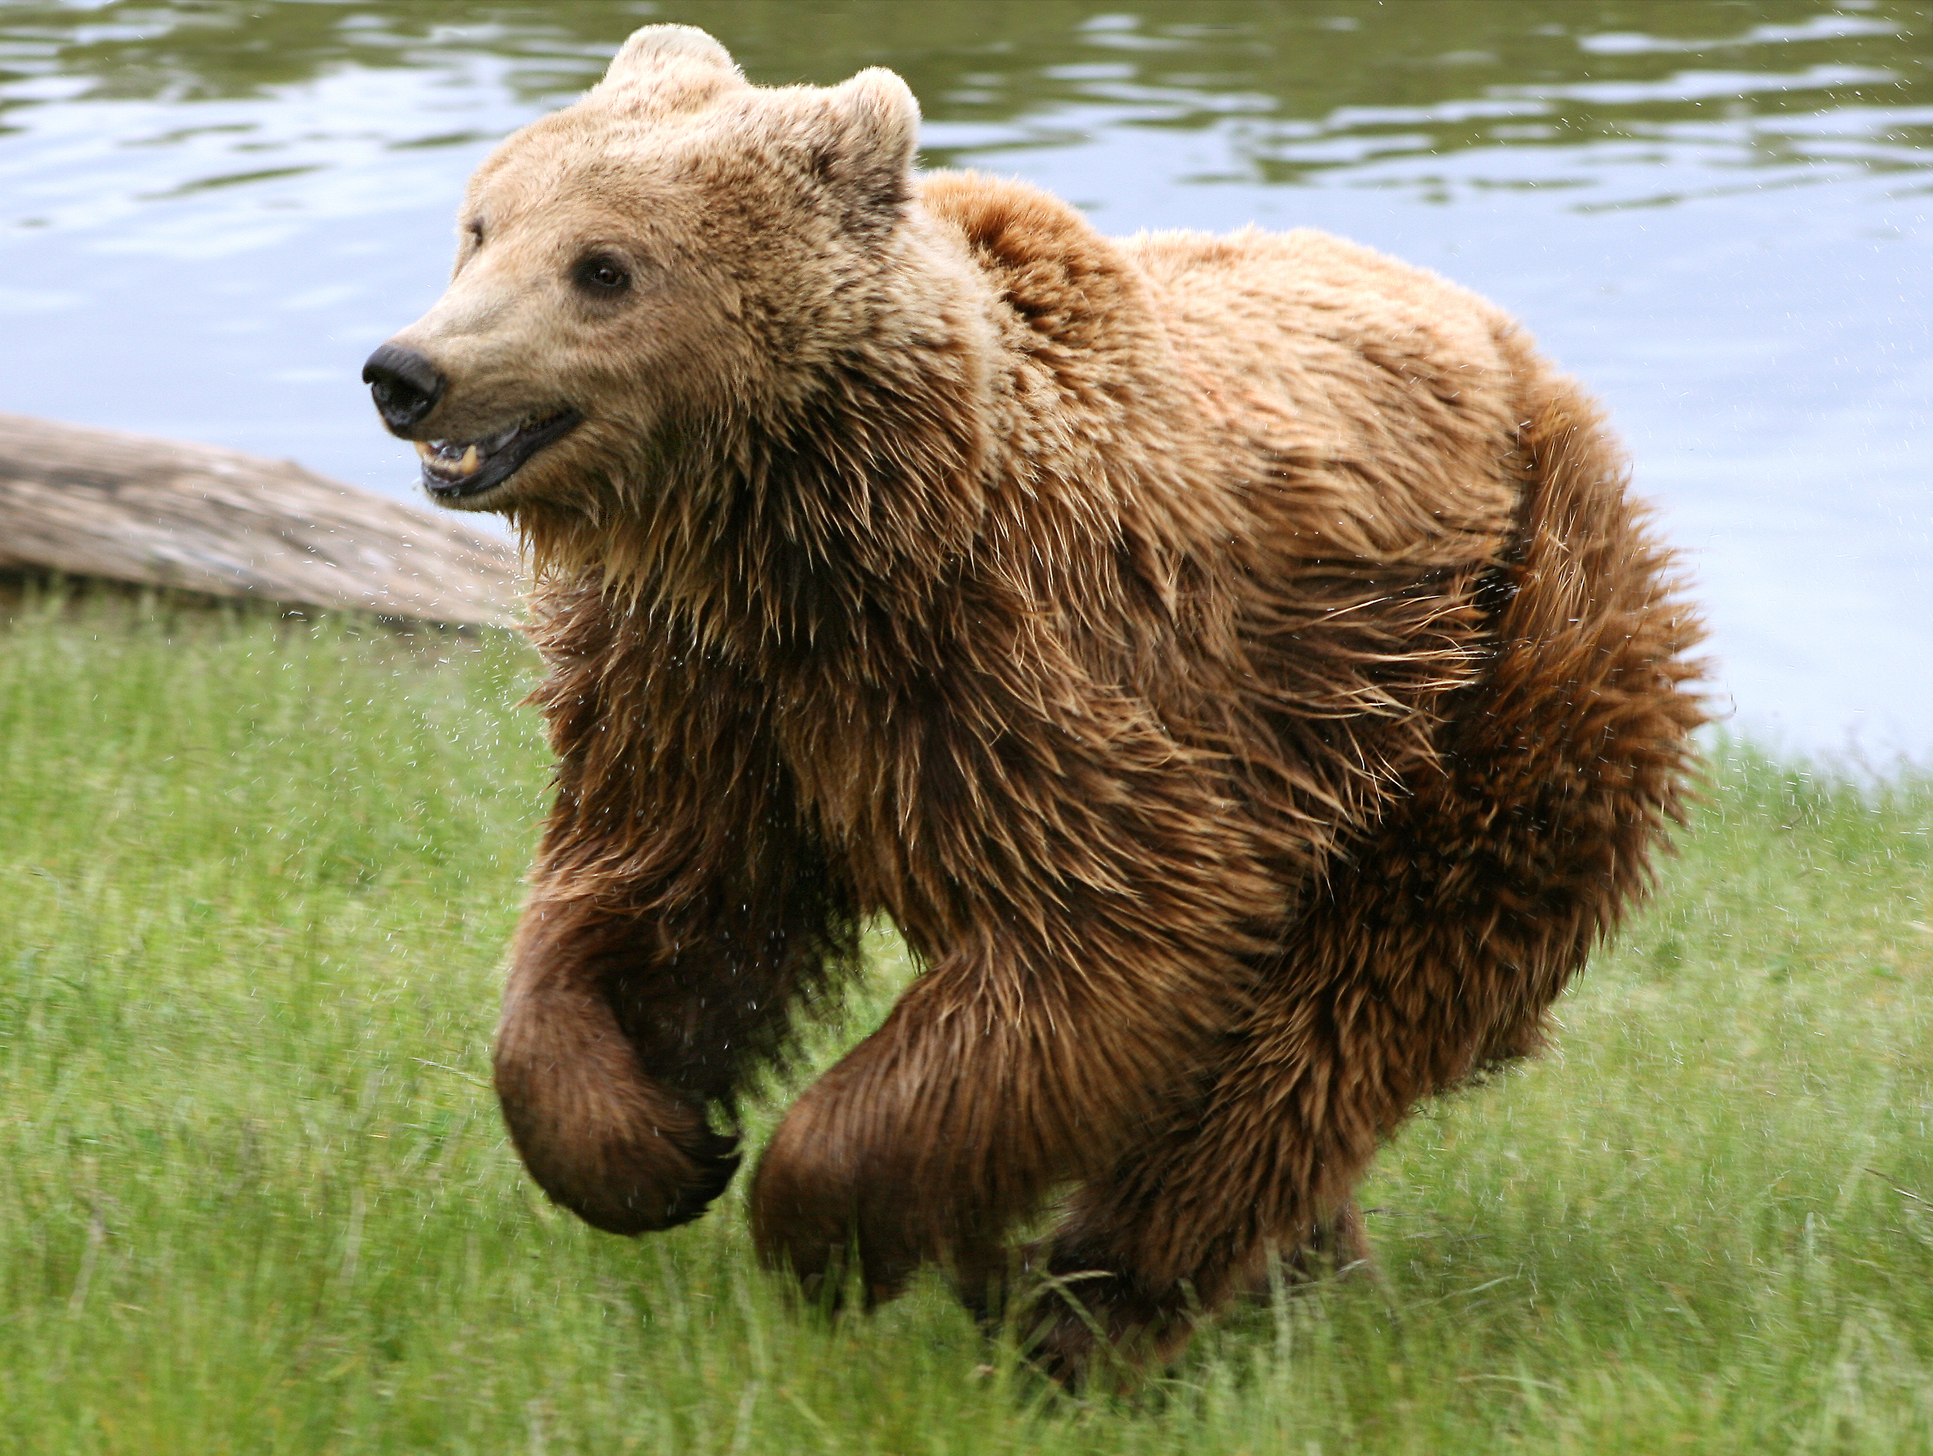 file-brown-bear-ursus-arctos-arctos-running-jpg-wikimedia-commons